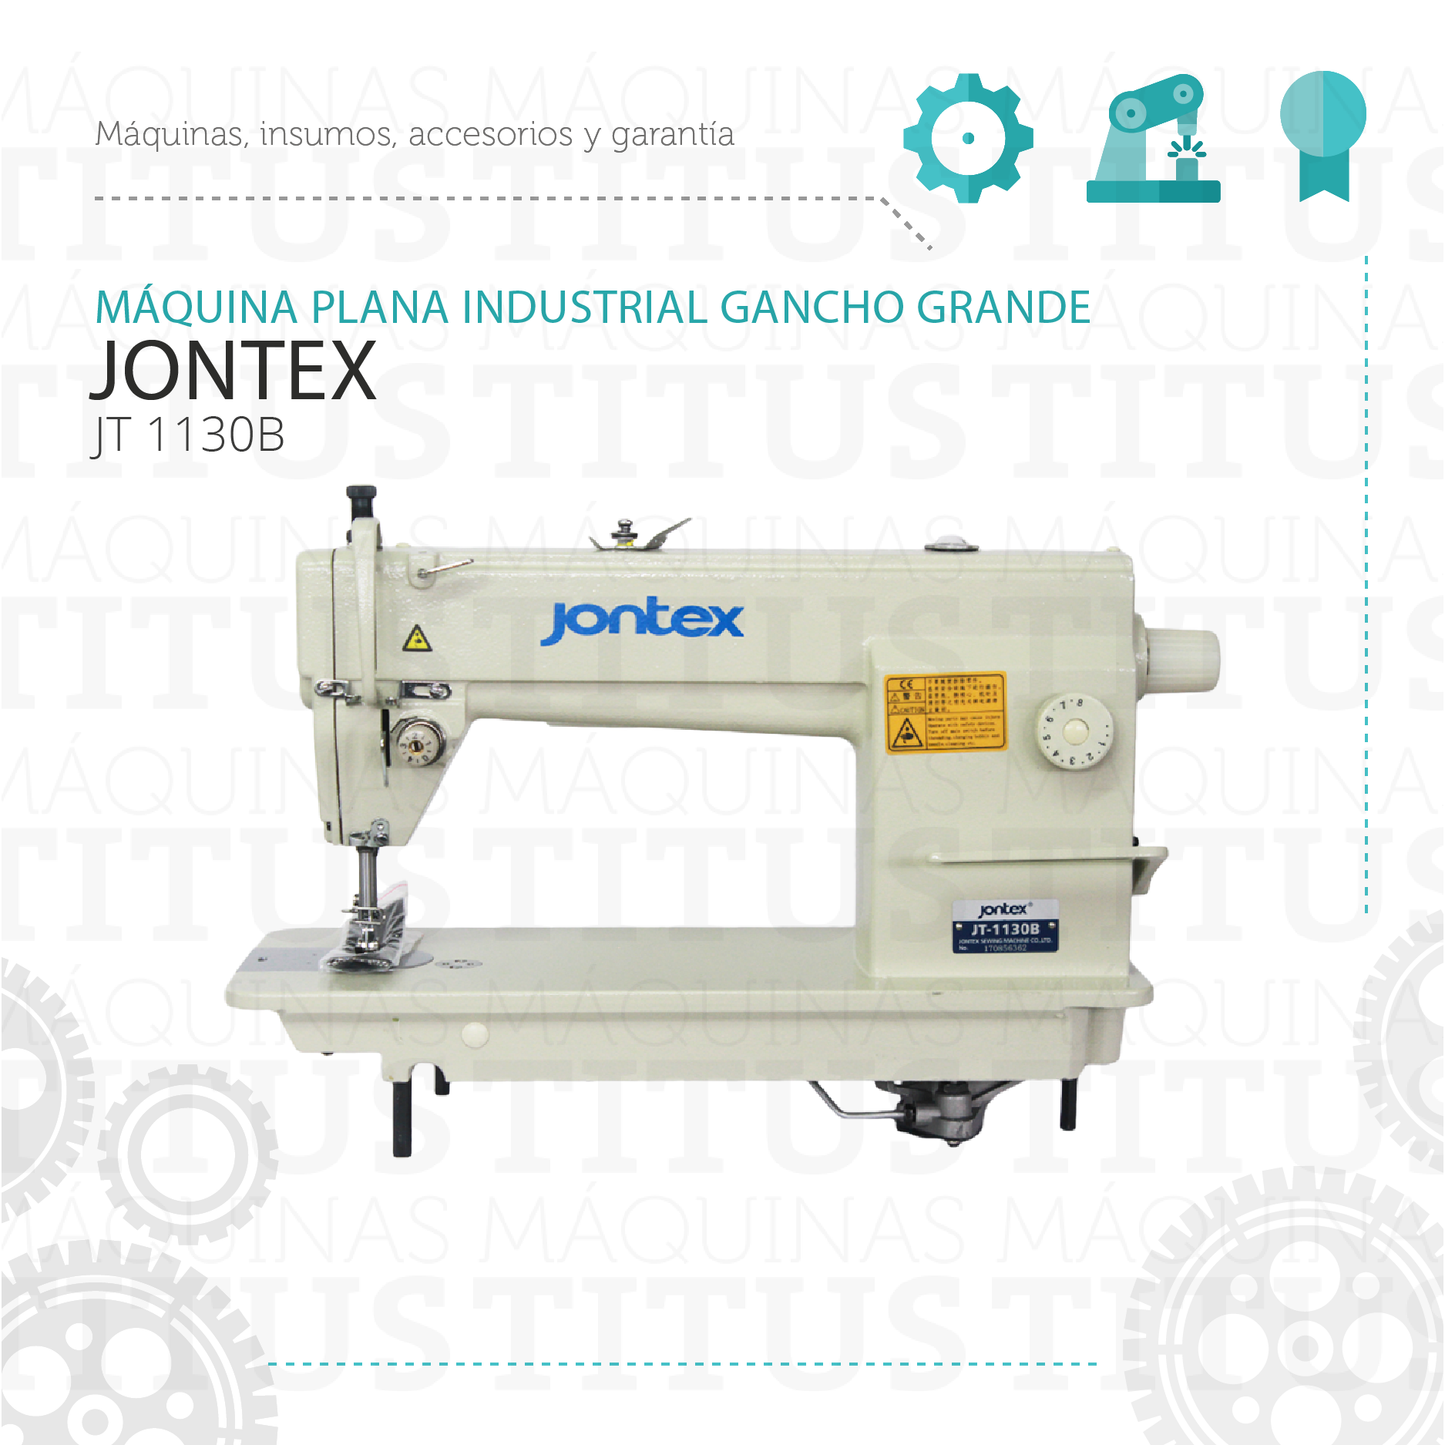 Plana Industrial Jontex JT 1130B Gancho Grande - Commercio